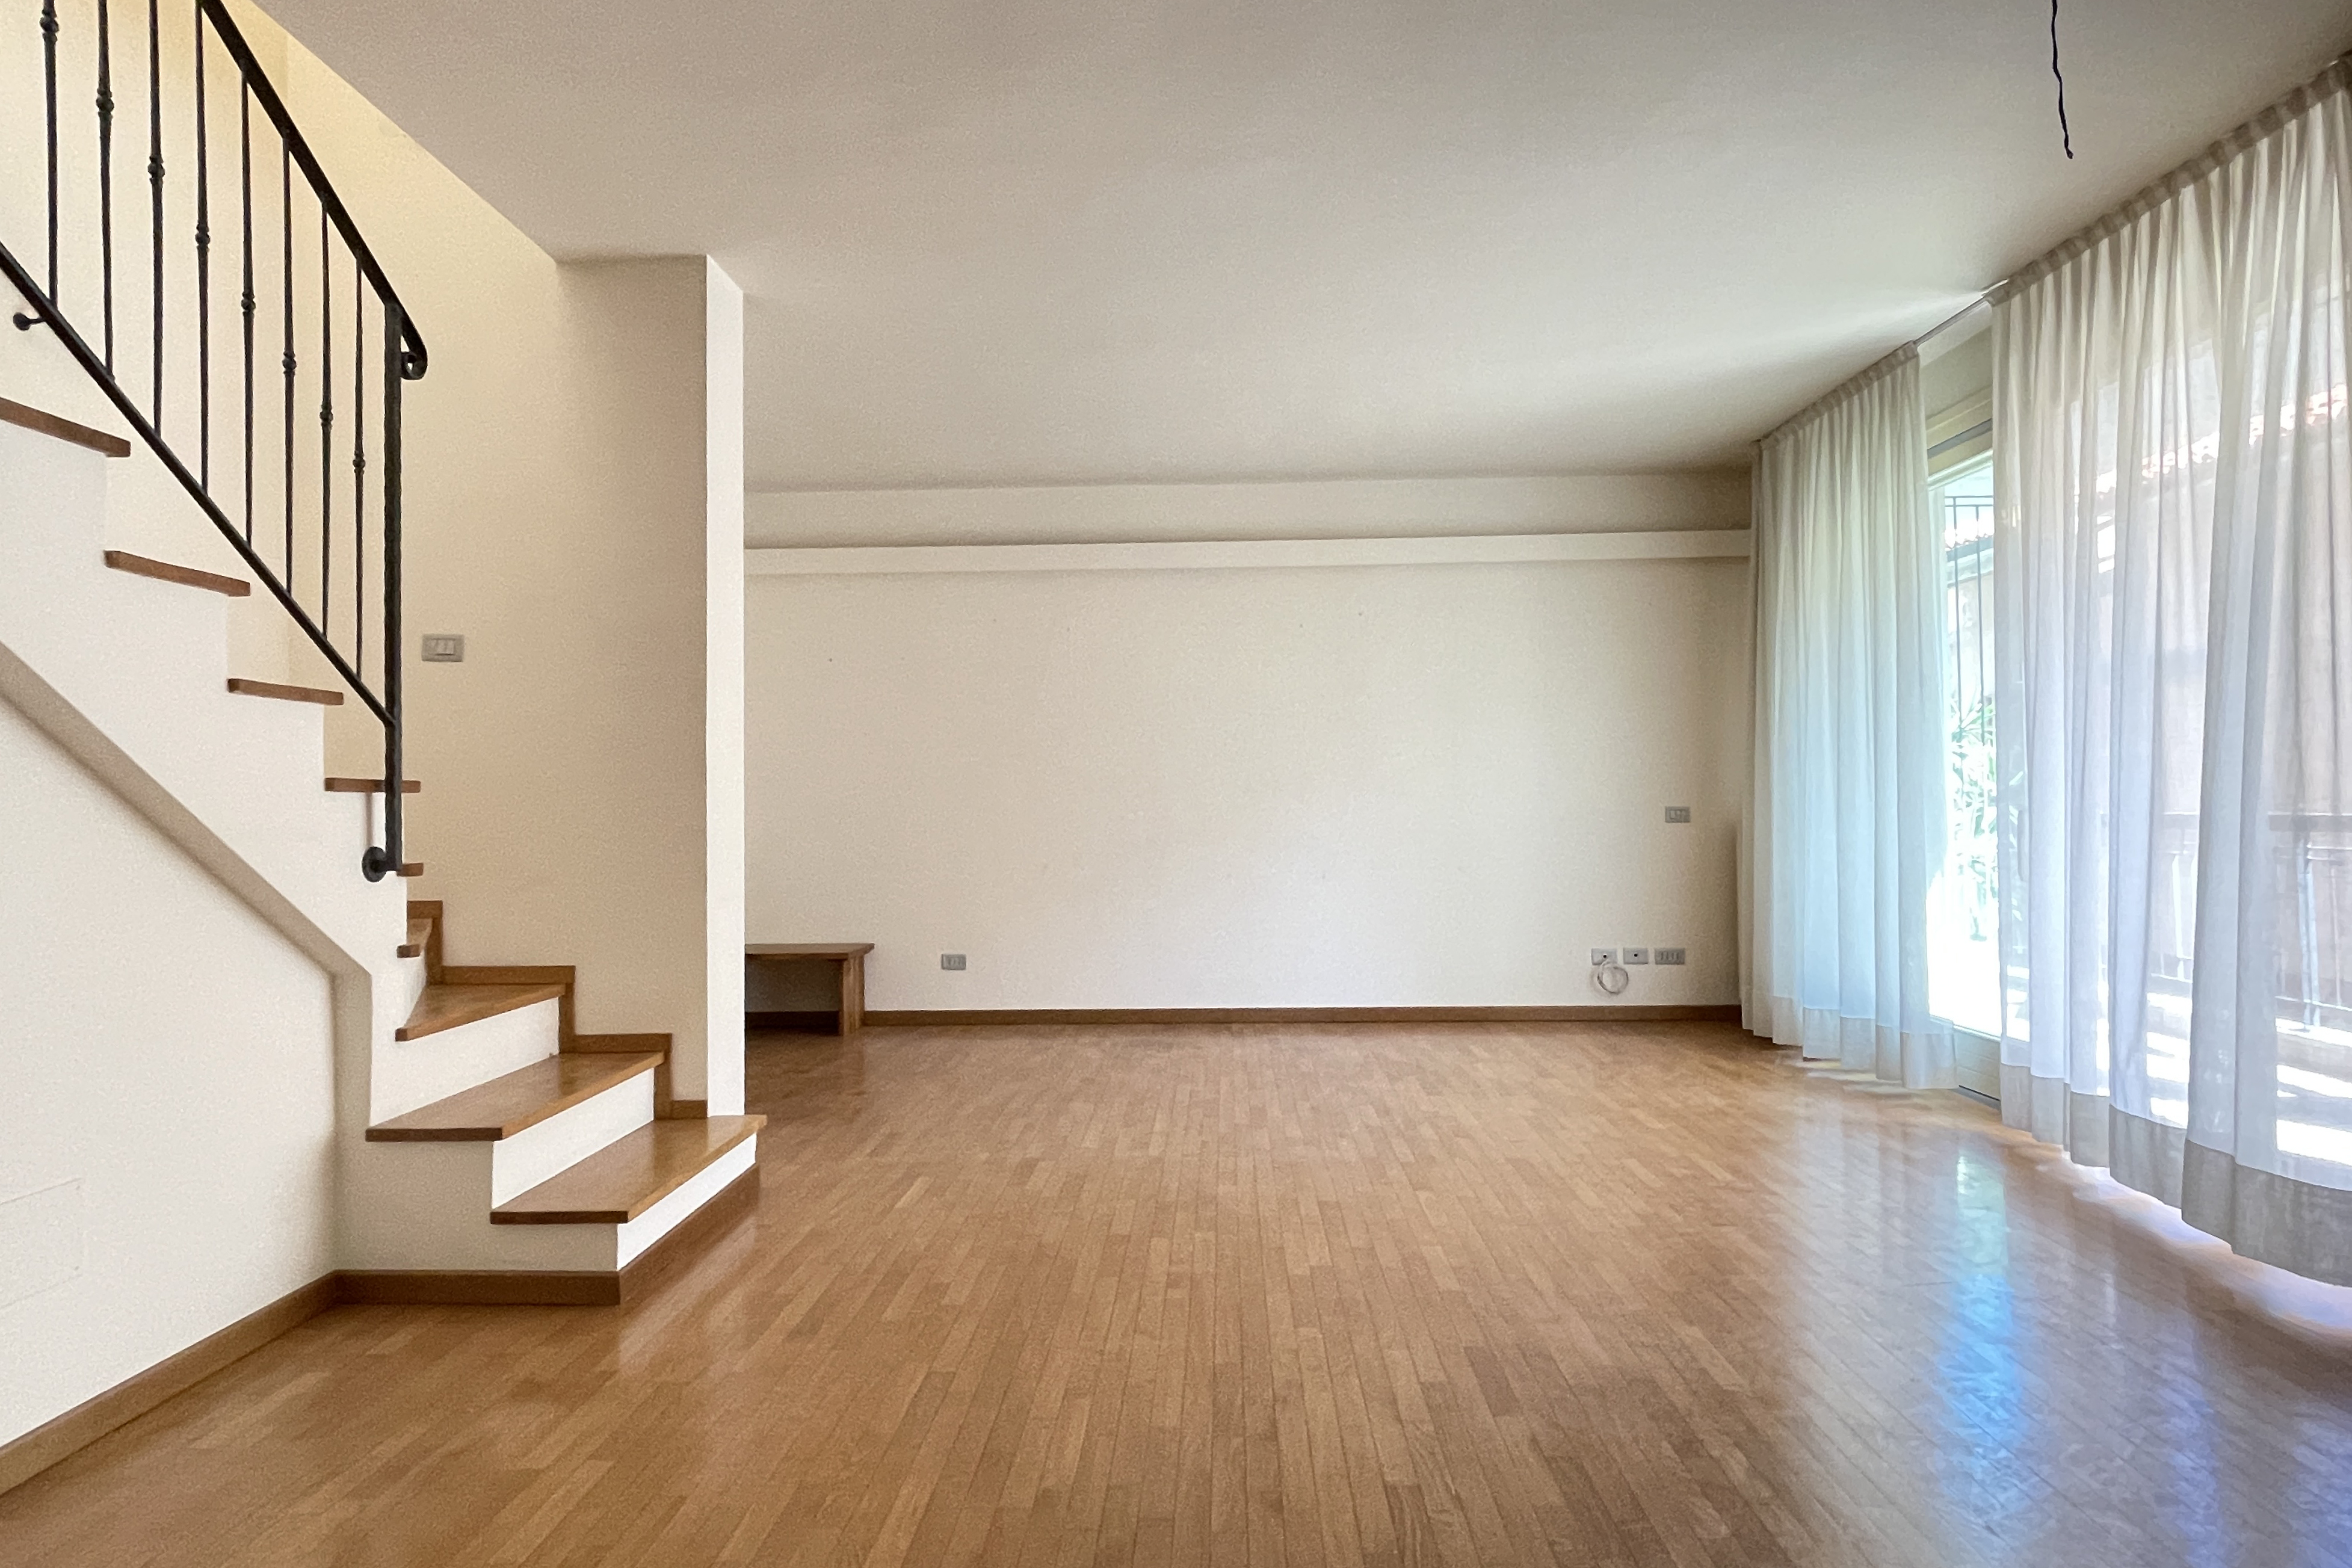 Vendita appartamento ultimo piano Pesaro - Zona centro storico (AP691)